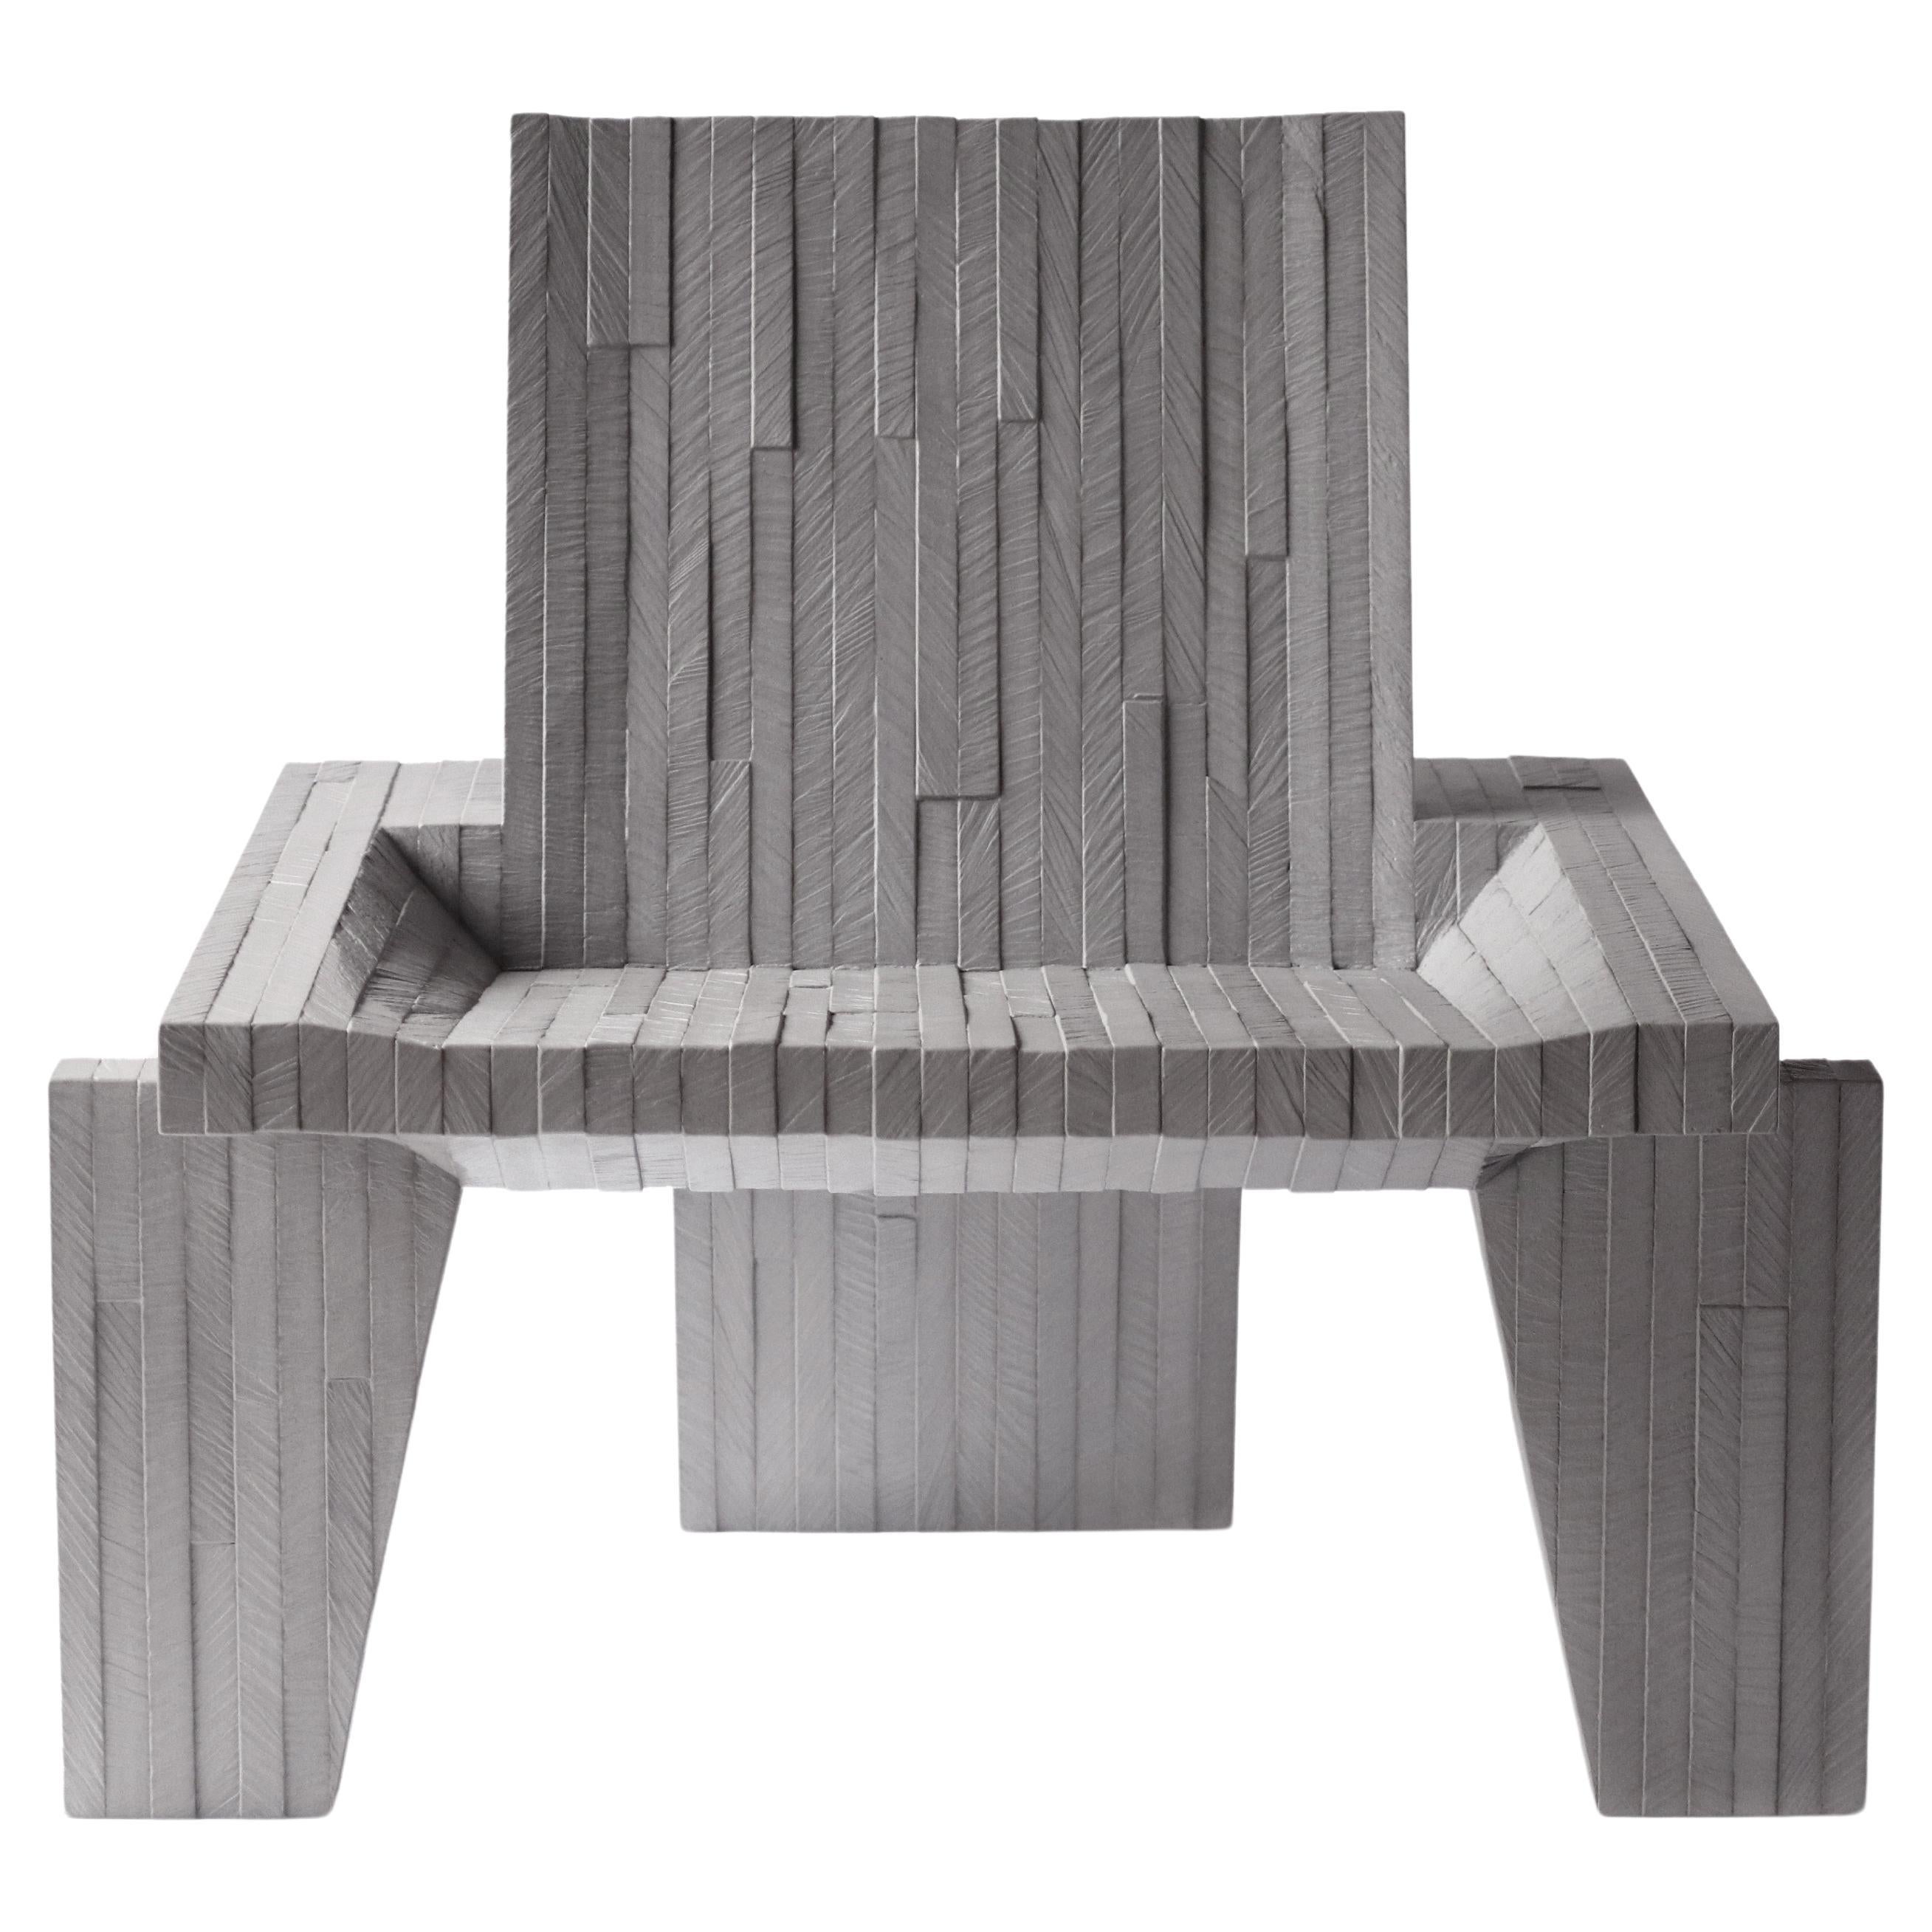 Hand-Crafted Wooden Chair, 'BRUTALISTA 02' by Marc Meeuwissen